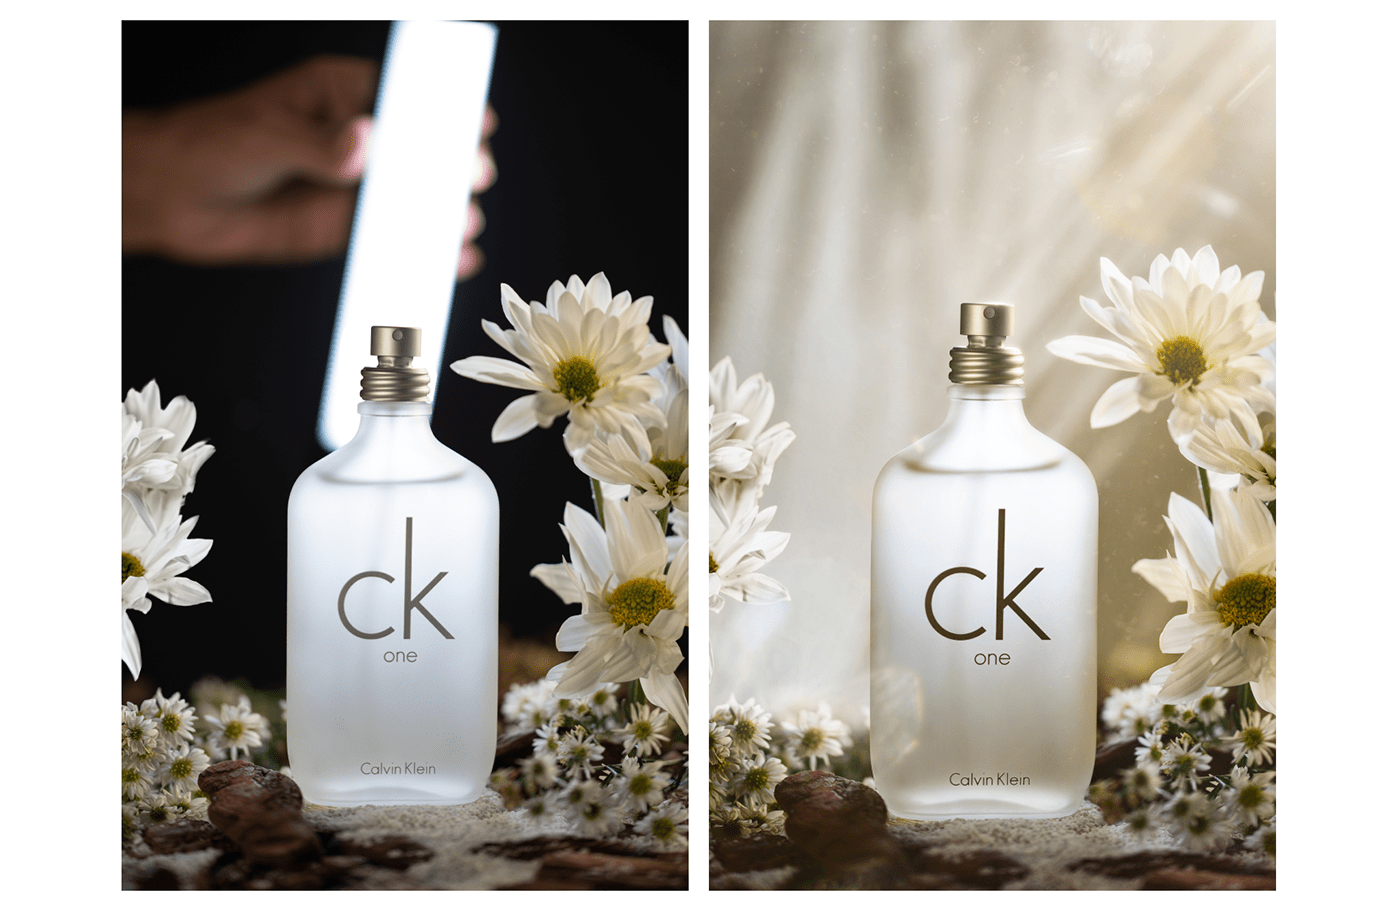 Calvin Klein parfum Photography  postproduction marketing  